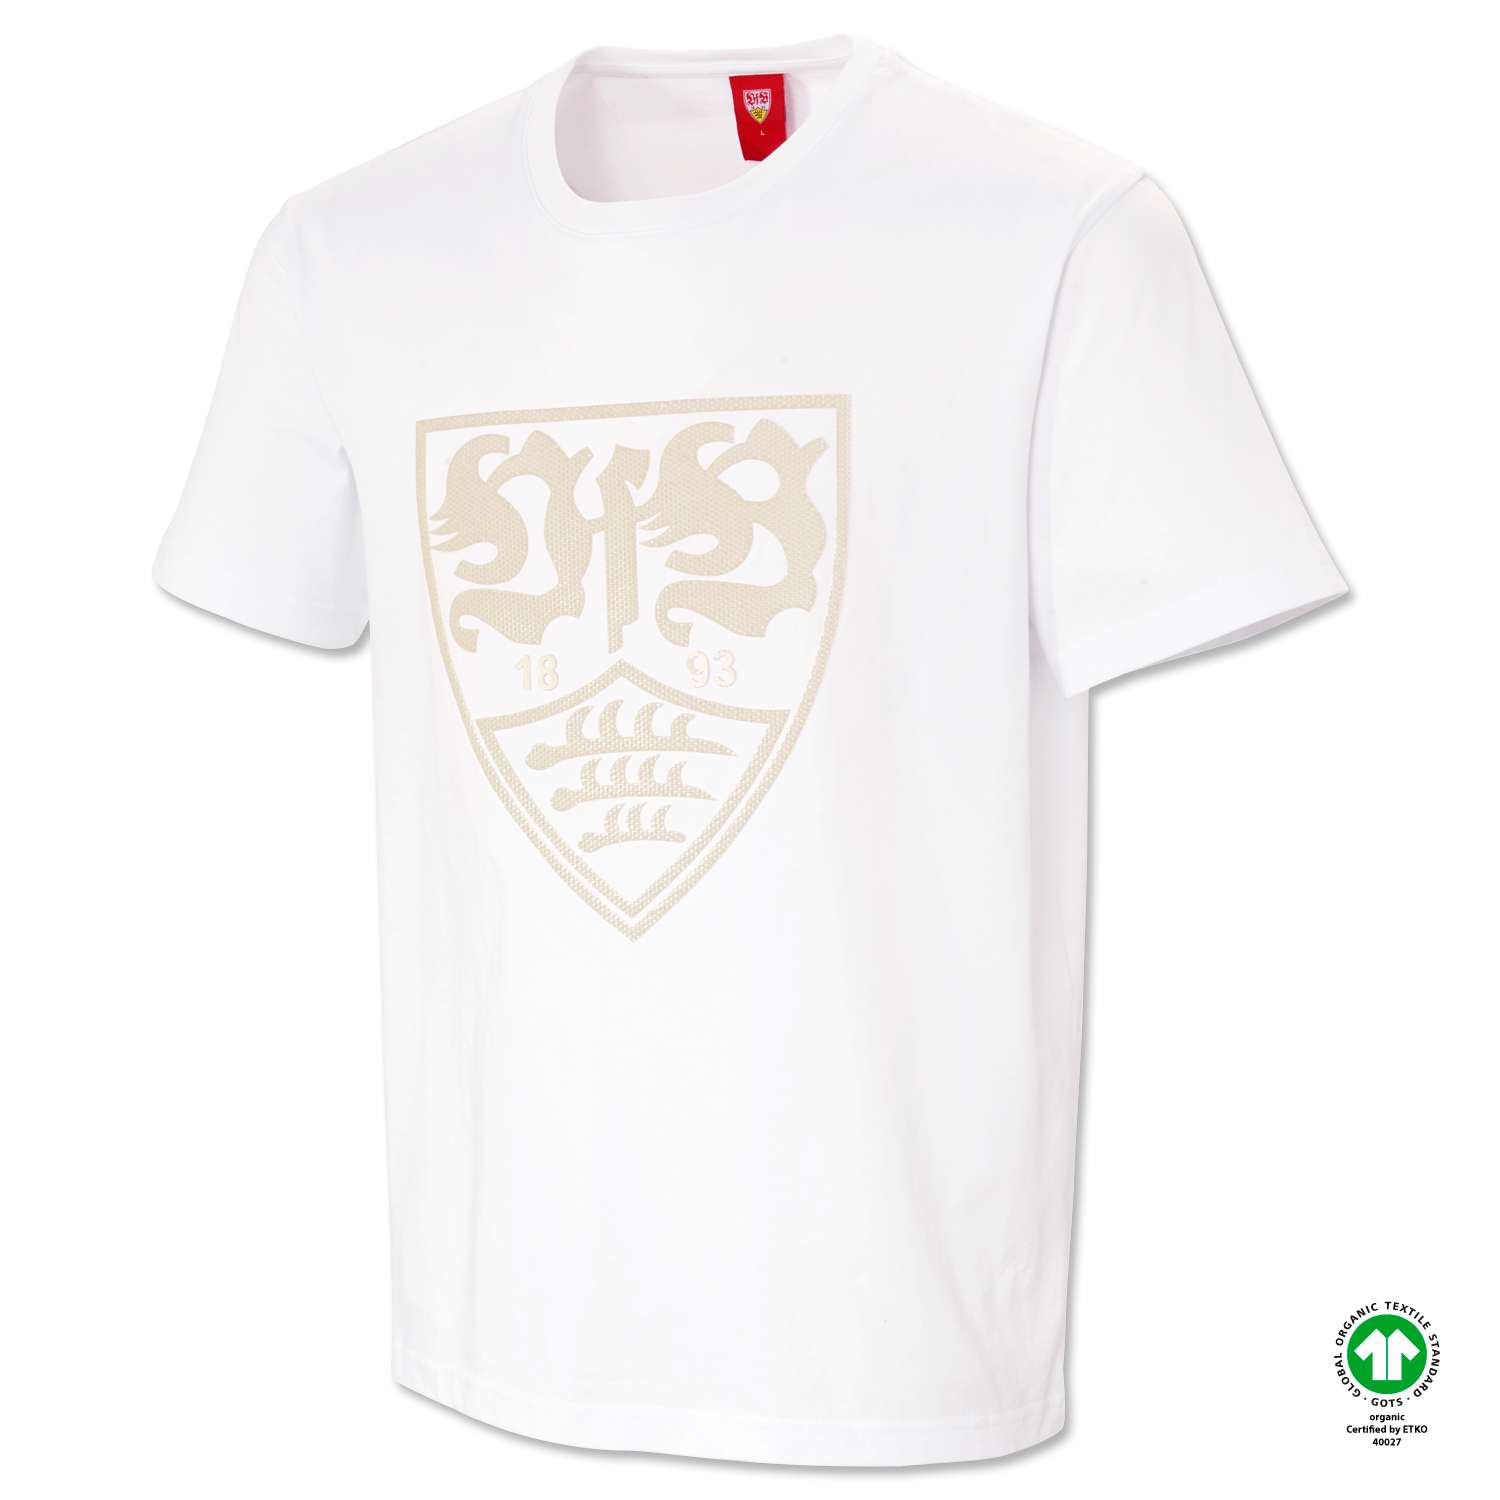 XXL VfB Stuttgart T-Shirt mit Logo und Schriftzug weiss S 